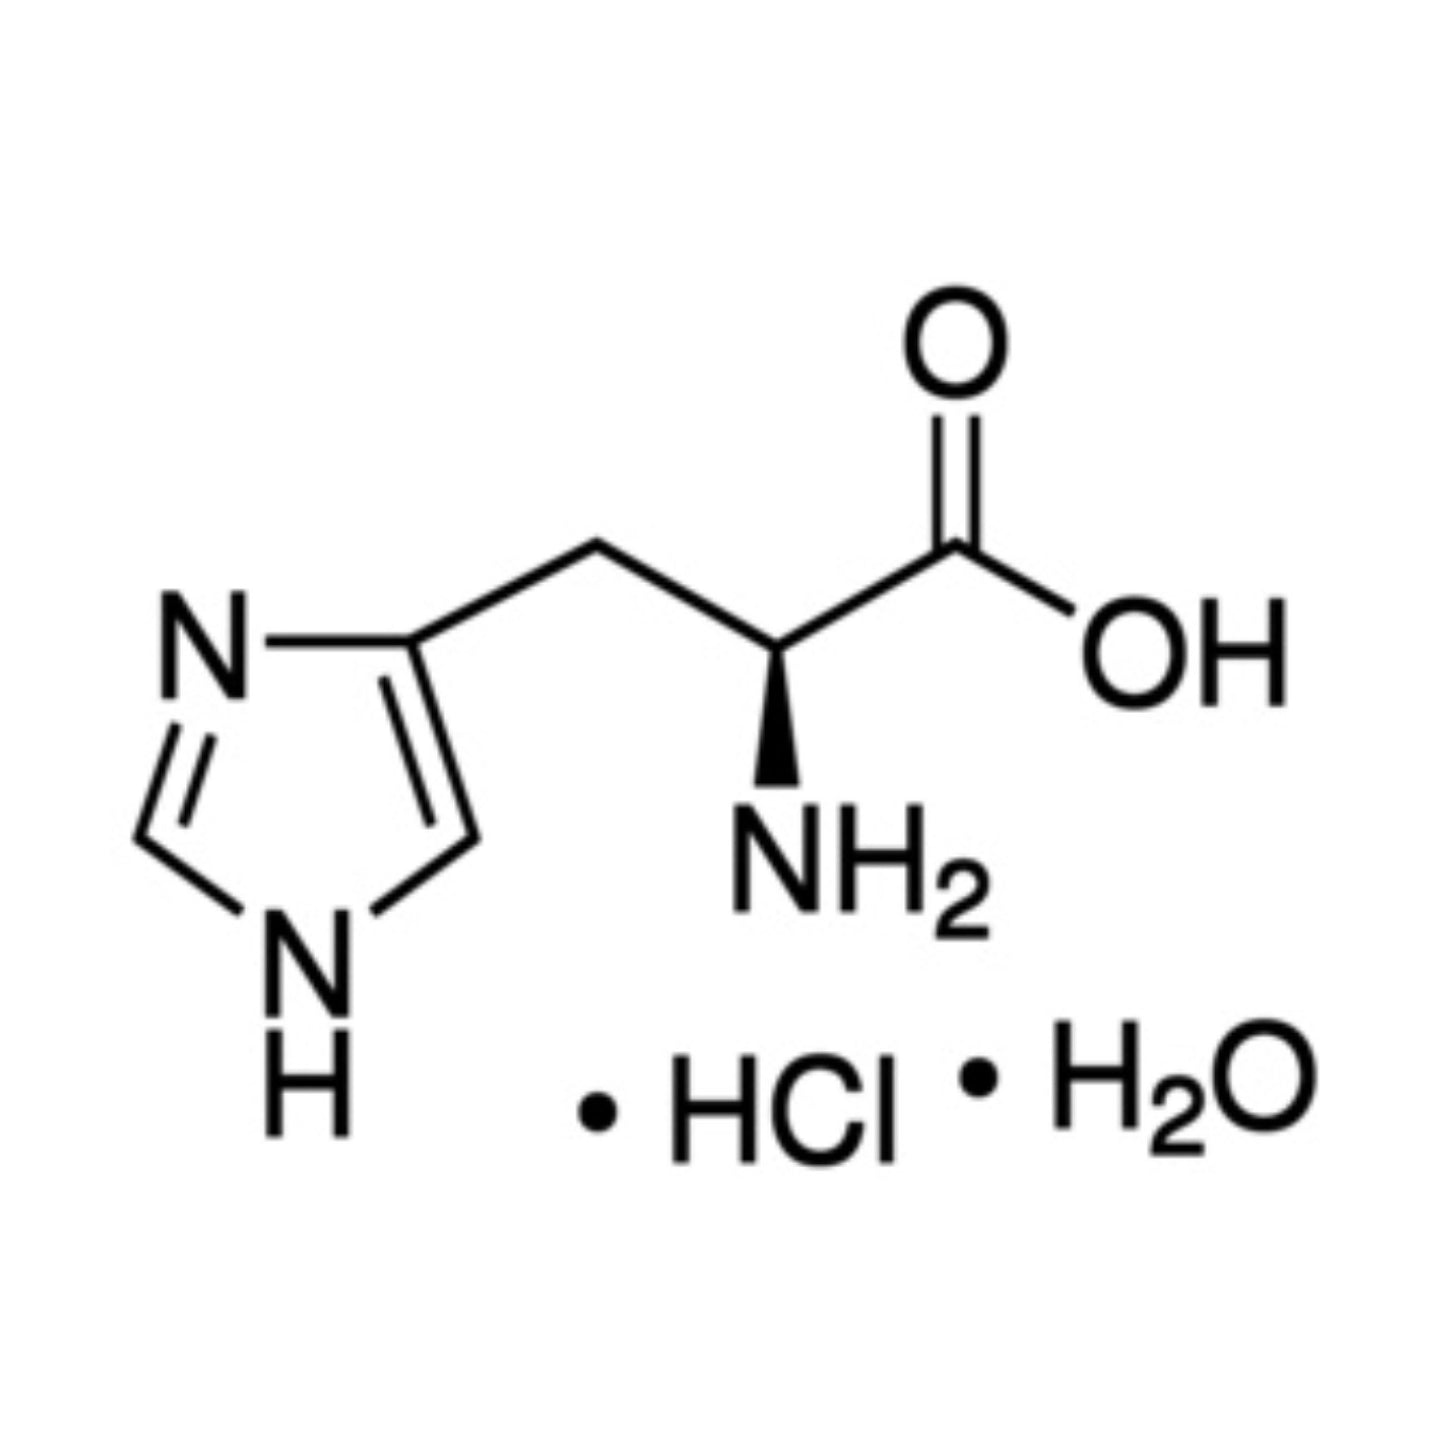 3 L-Histidine HCL (Maximum Daily Dosage 500mg) - Three Ingredients